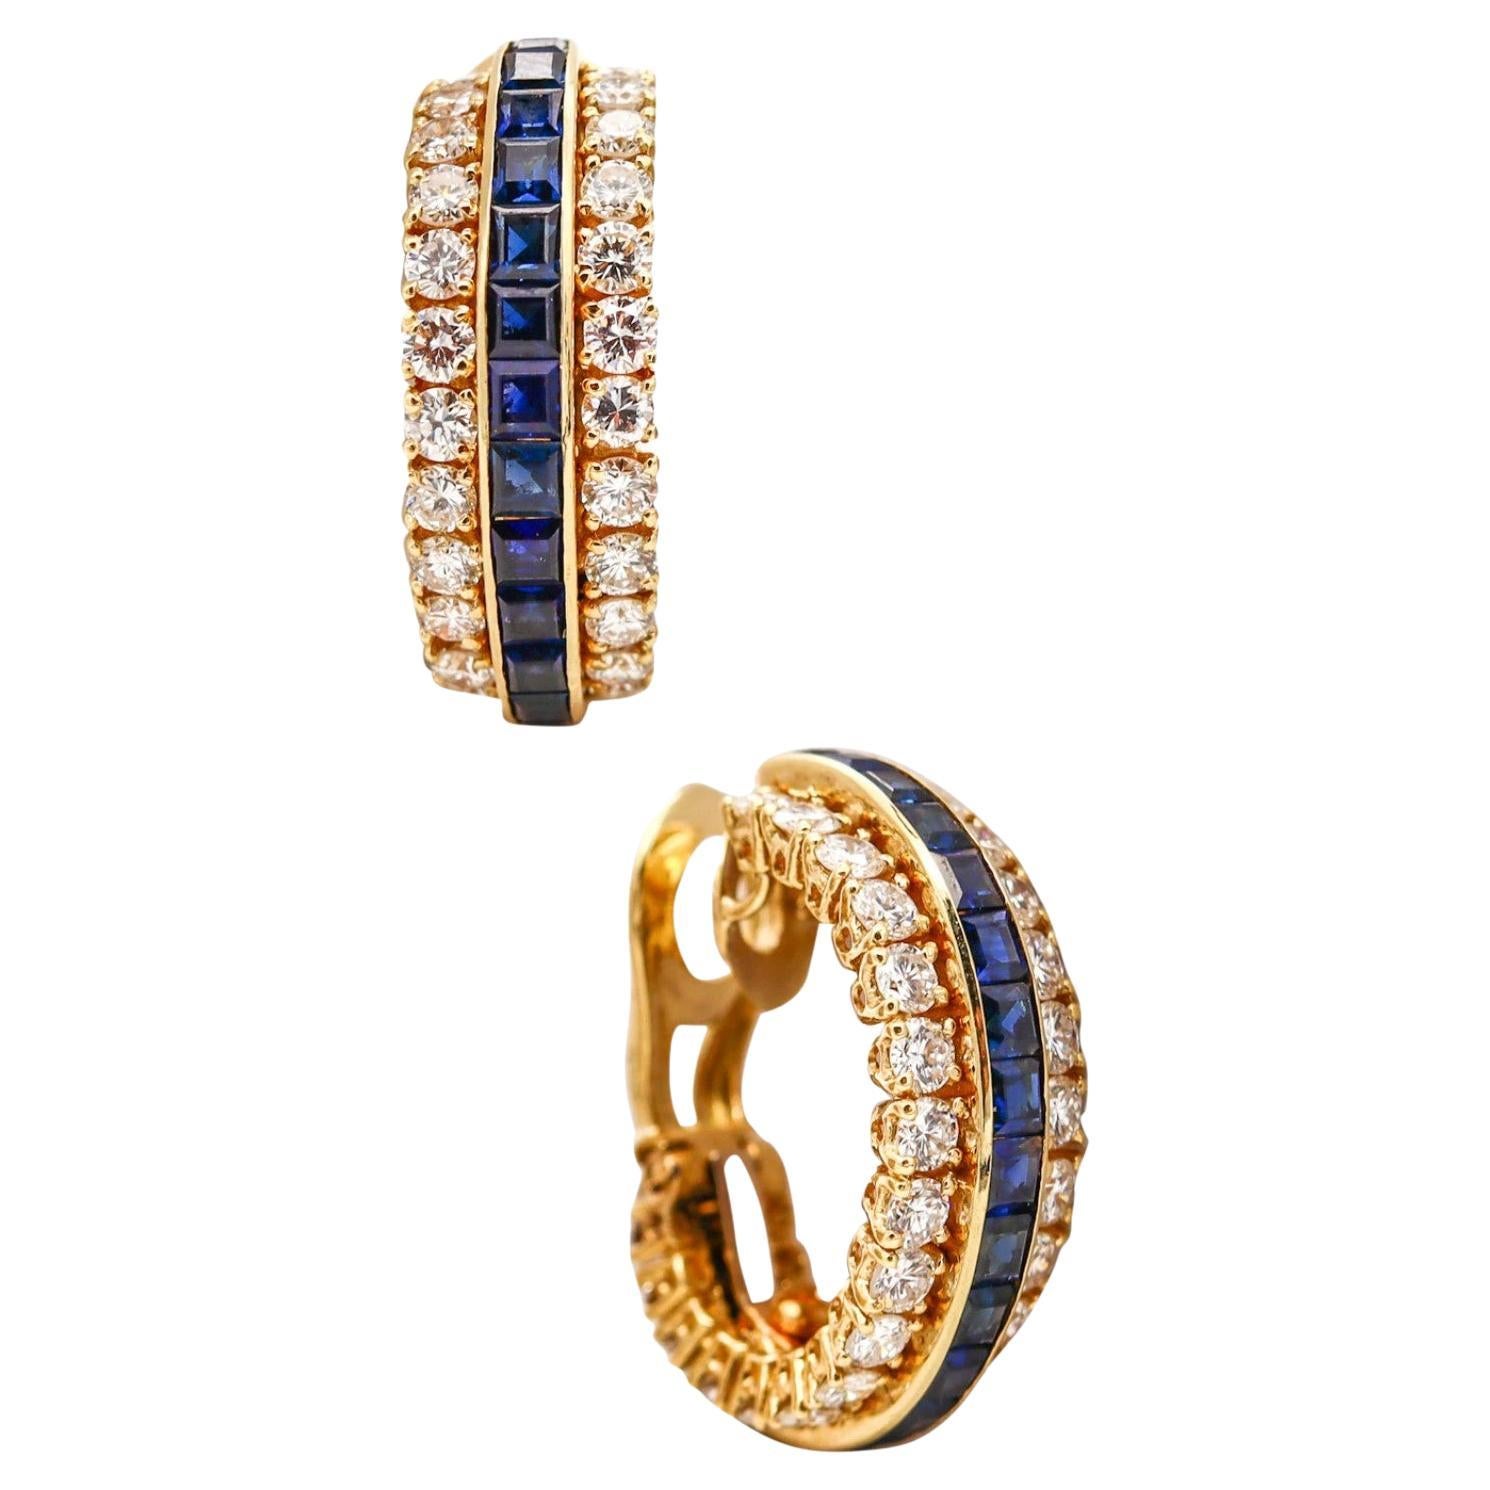 Van Cleef & Arpels 1970 Paris Clip Earrings 18Kt Gold 9.04 Ct Diamonds Sapphires